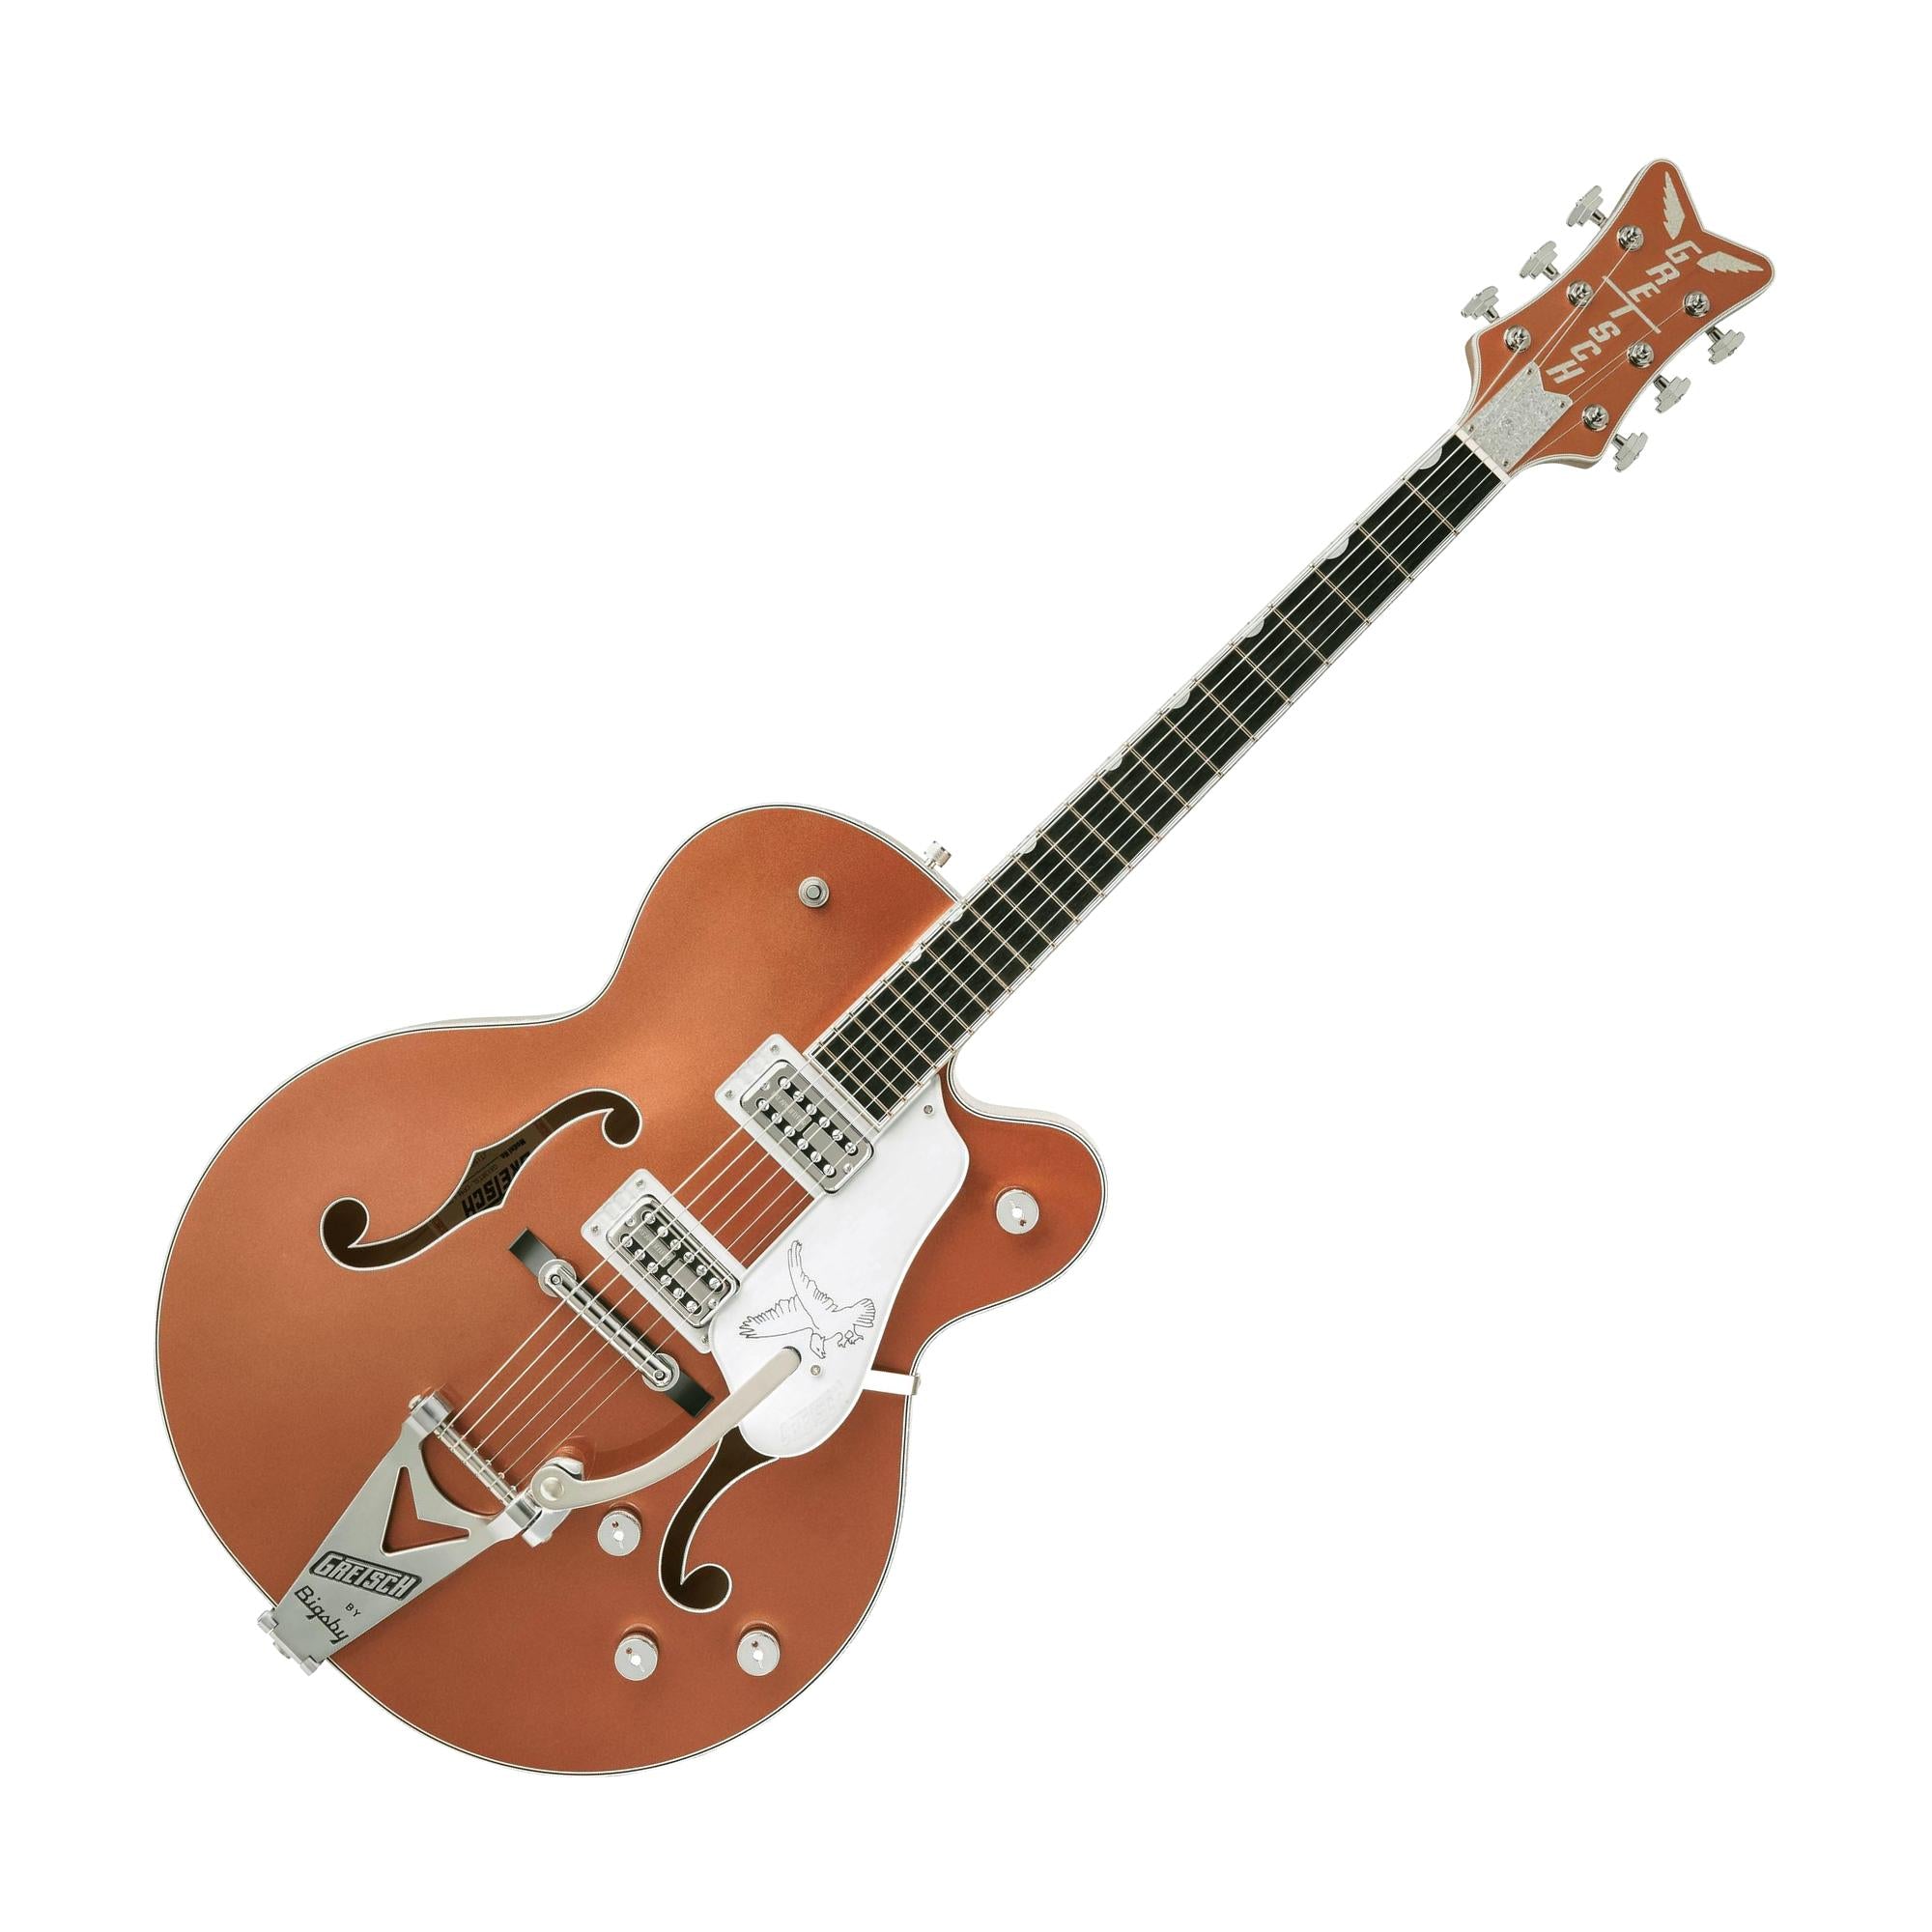 Gretsch G6136T Limited Edition Falcon Hollowbody Electric Guitar, Two Tone Copper/Sahara Metallic